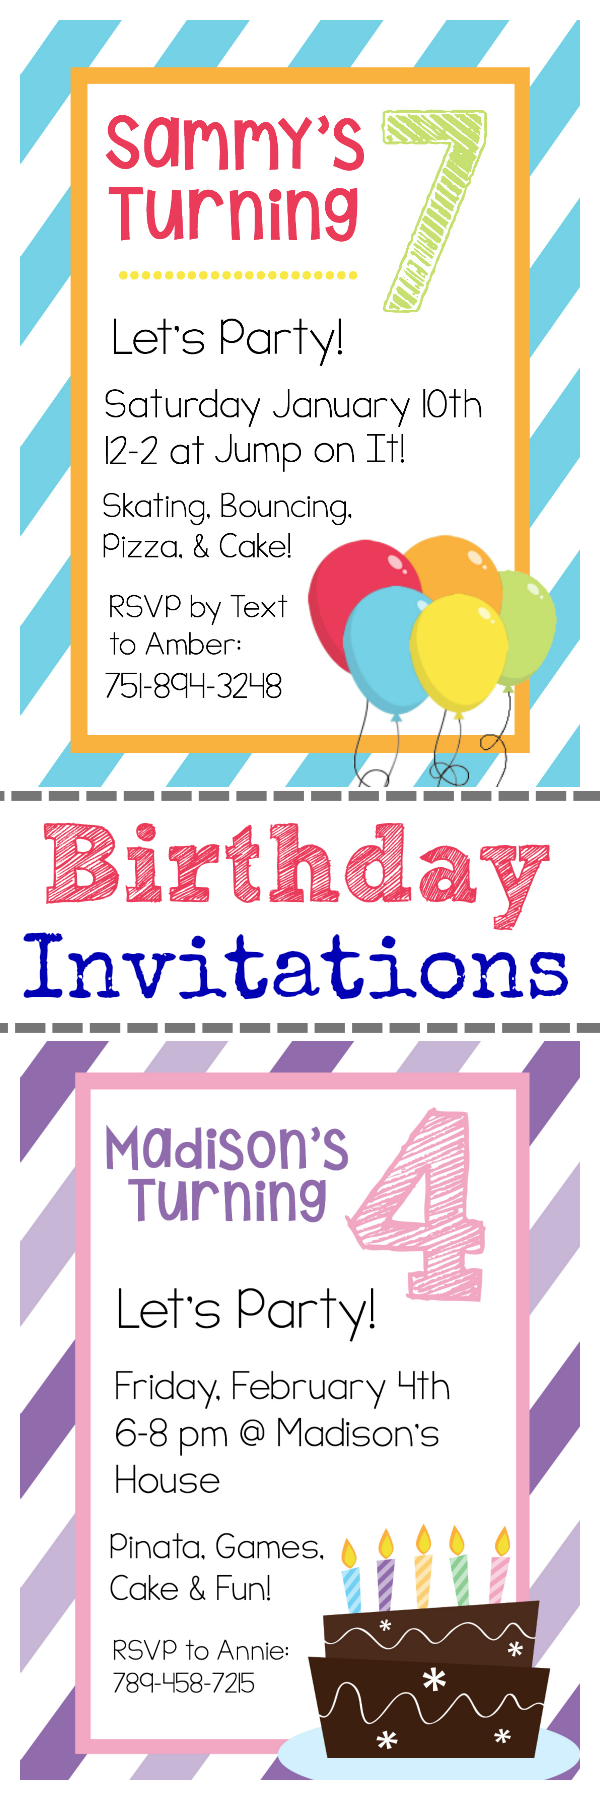 25 Birthday Invitation Templates Free Images Free Invitation Template